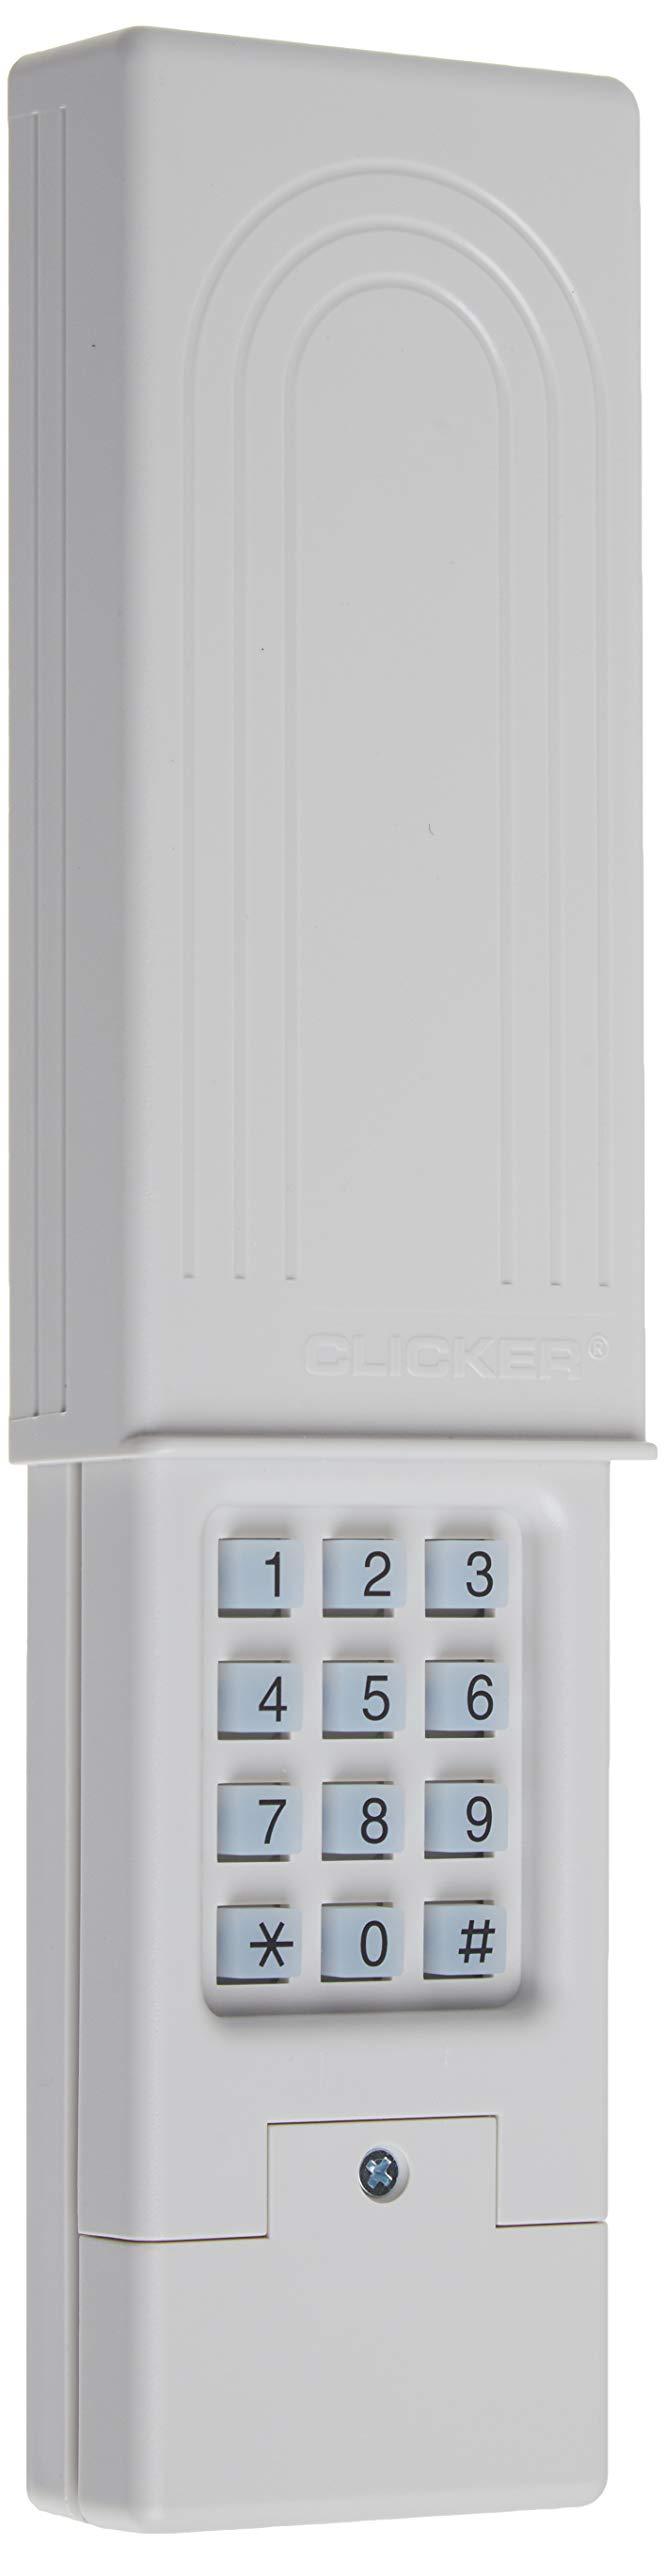  [AUSTRALIA] - Chamberlain Group Clicker Keyless Entry KLIK2U-P2, Works with Chamberlain, LiftMaster, Craftsman, Genie and More, Security +2.0 Compatible Garage Door Opener Keypad, White